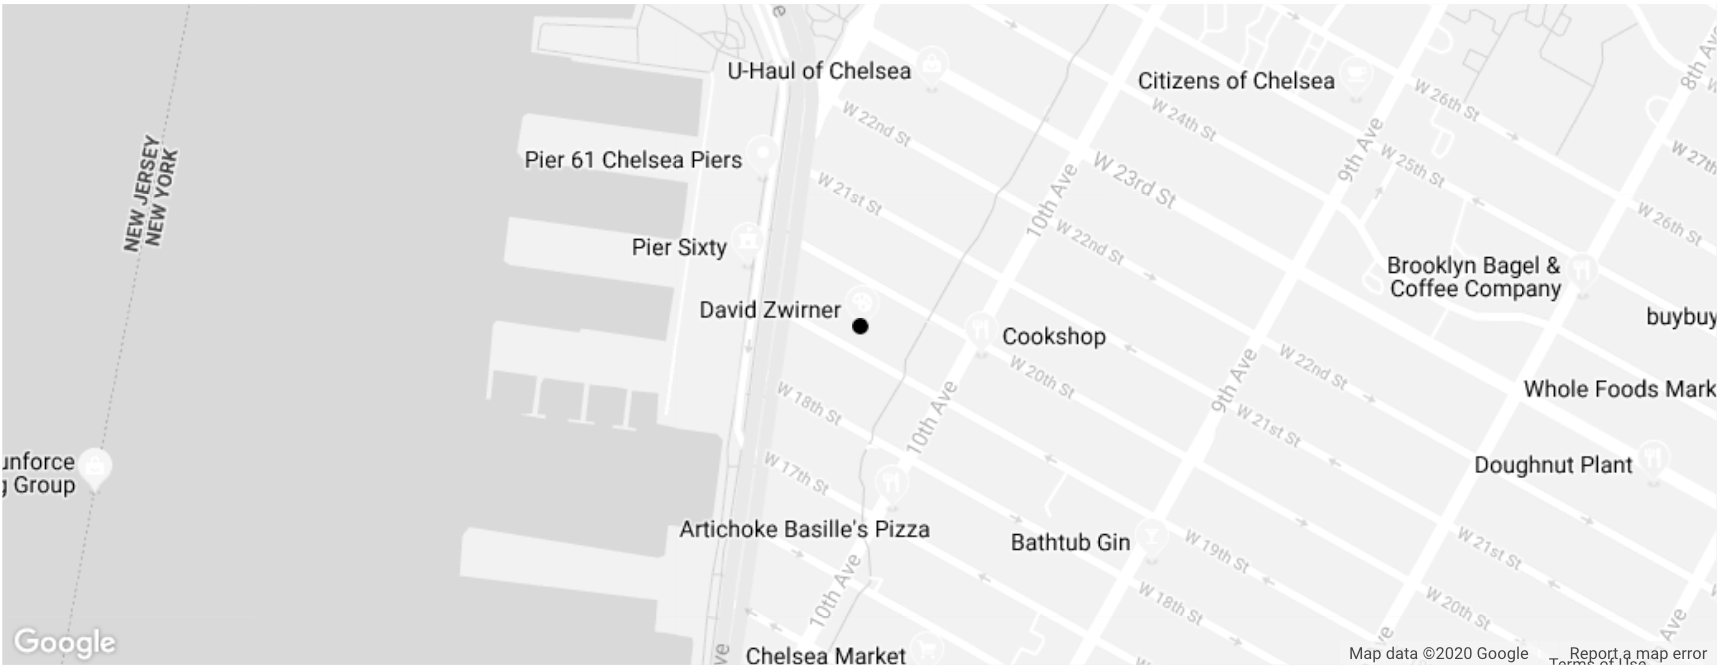 David Zwirner New York 19th Street Location